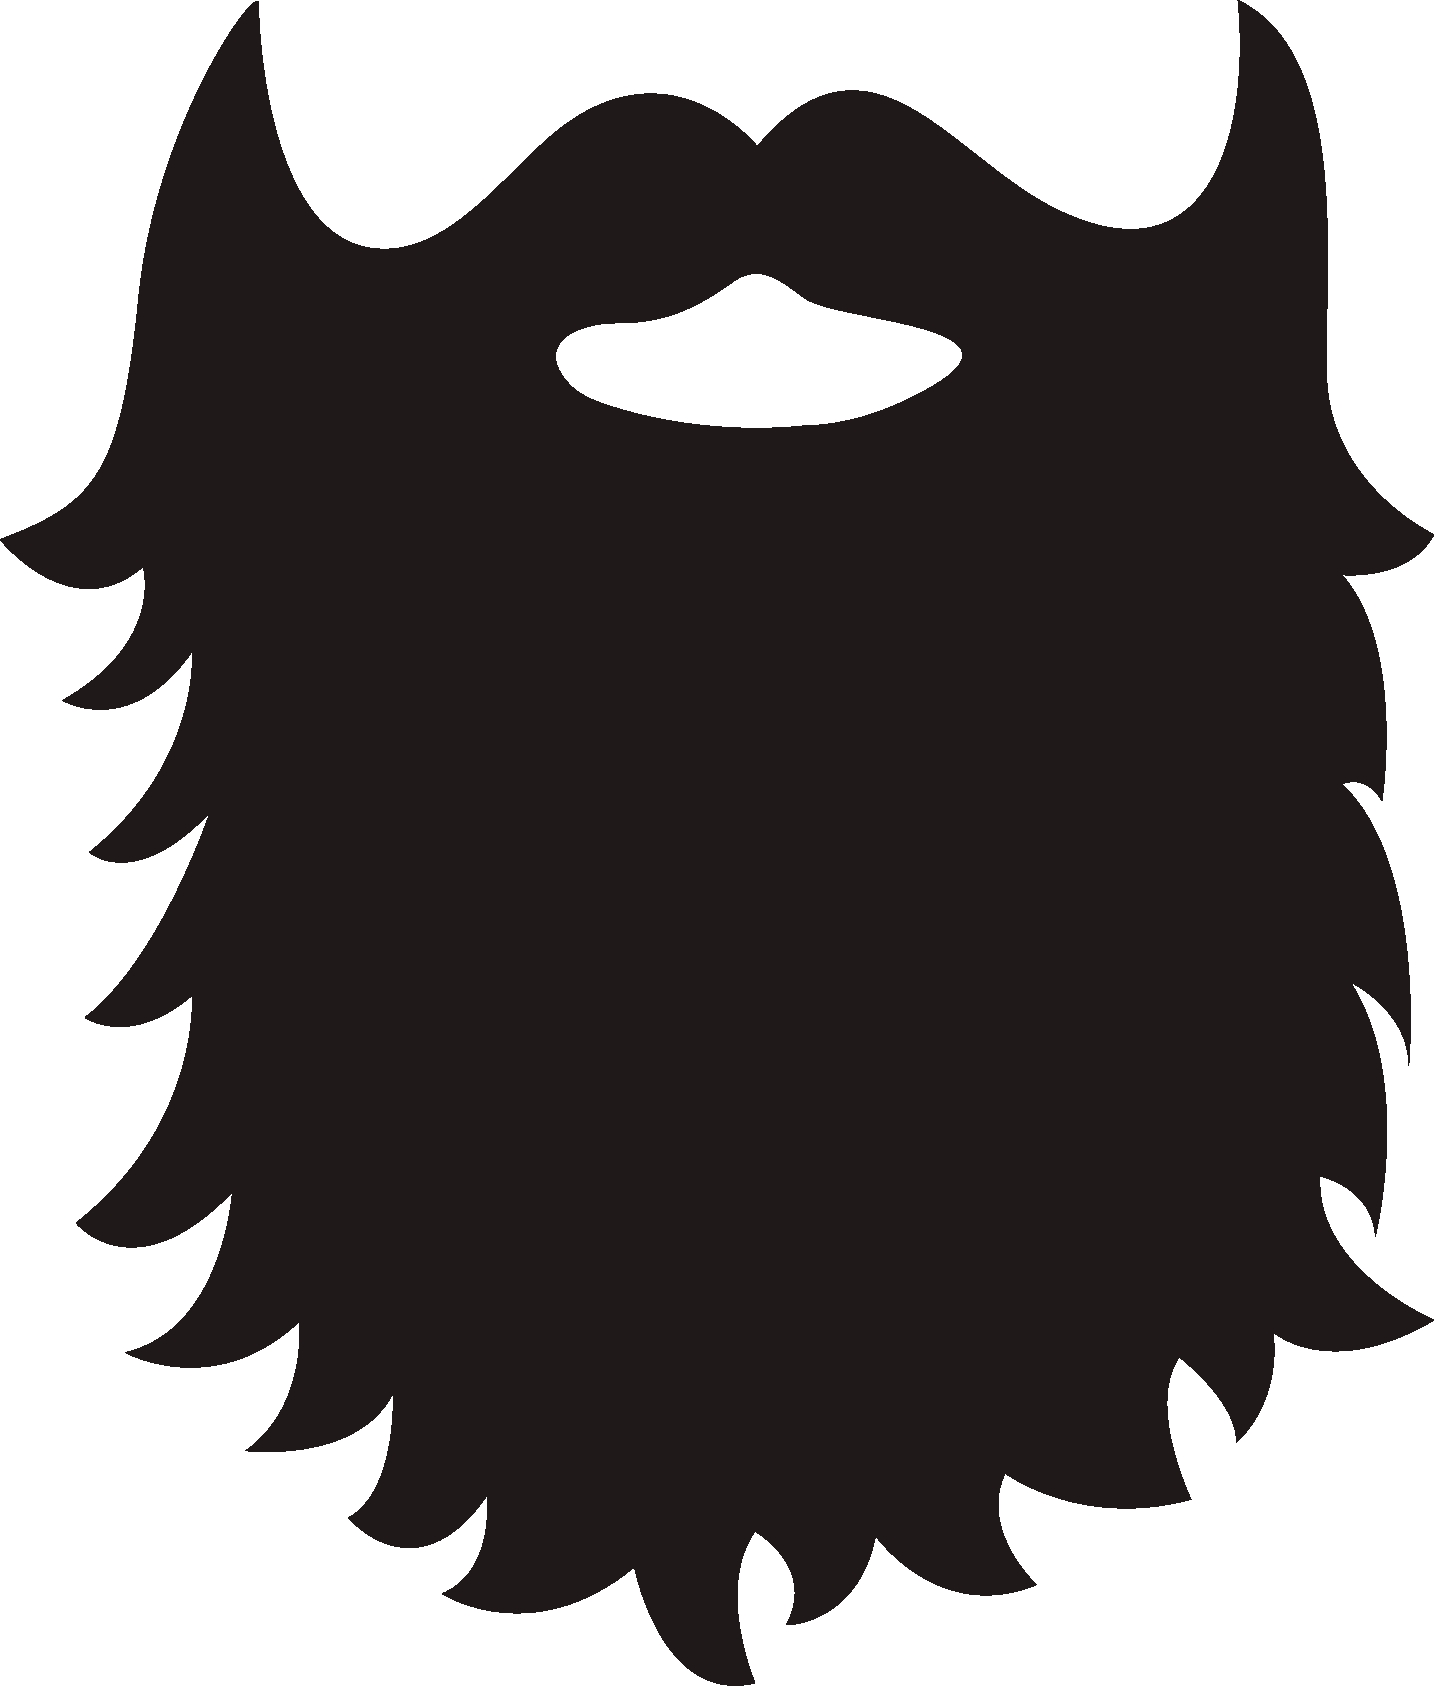 Beard clipart full beard. Unique design digital collection